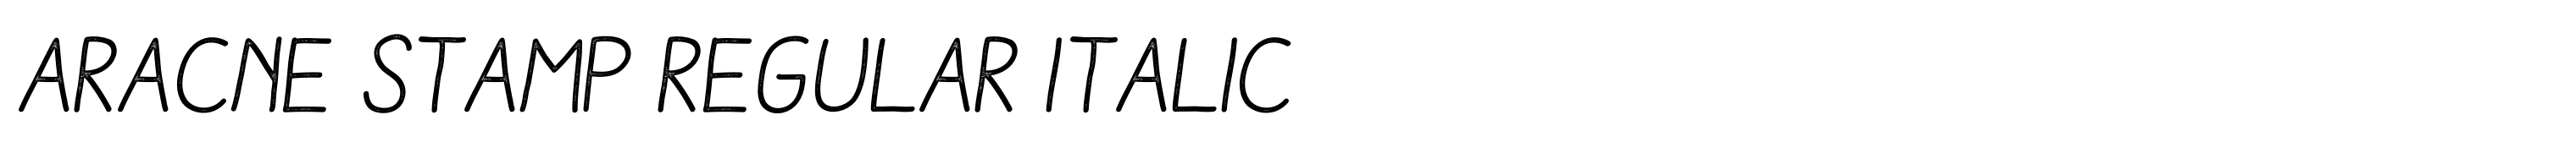 Aracne Stamp Regular Italic